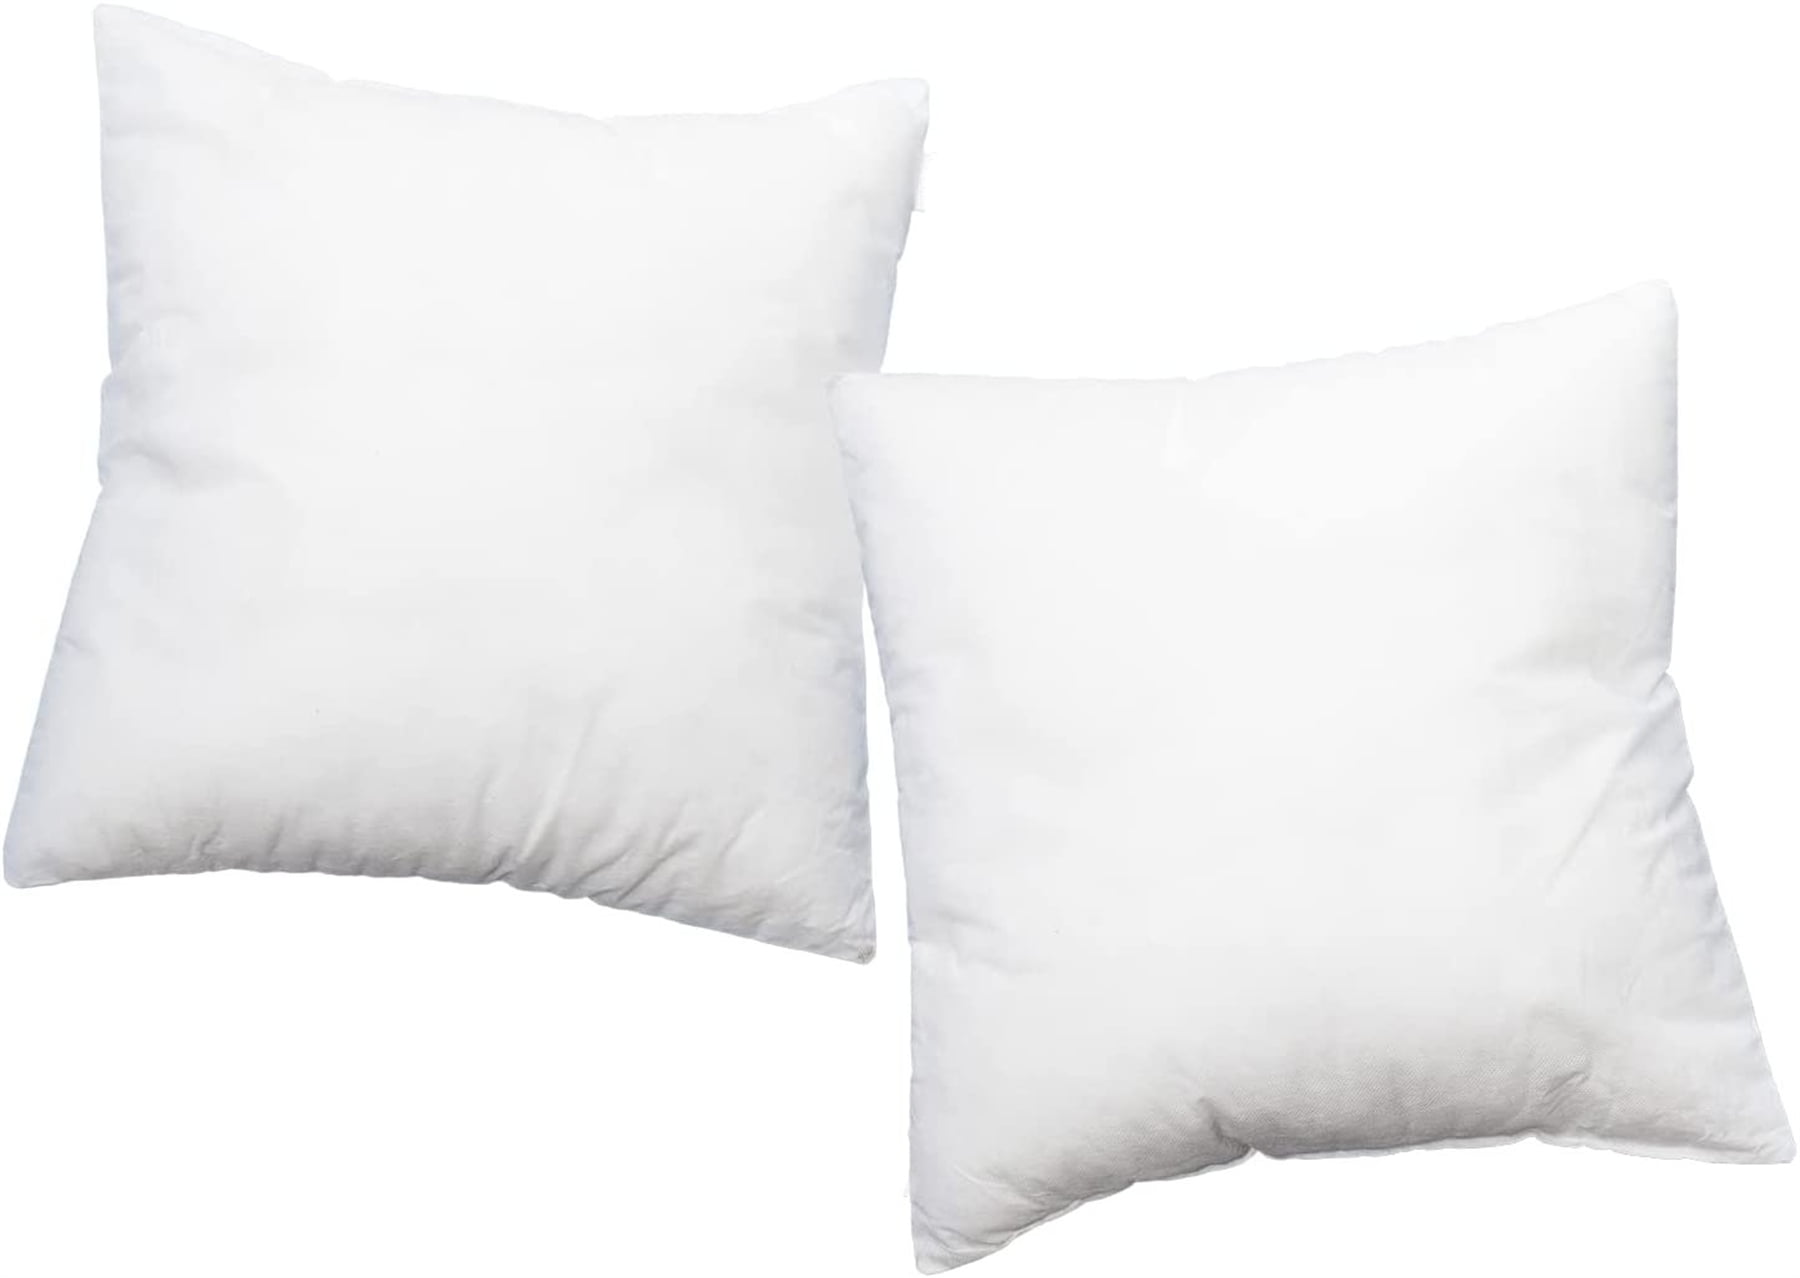  EDOW Throw Pillow Insert, Set of 2 Down Alternative Polyester  Square Form Decorative Pillow, Cushion,Sham Stuffer. (White, 18x18) : Home  & Kitchen